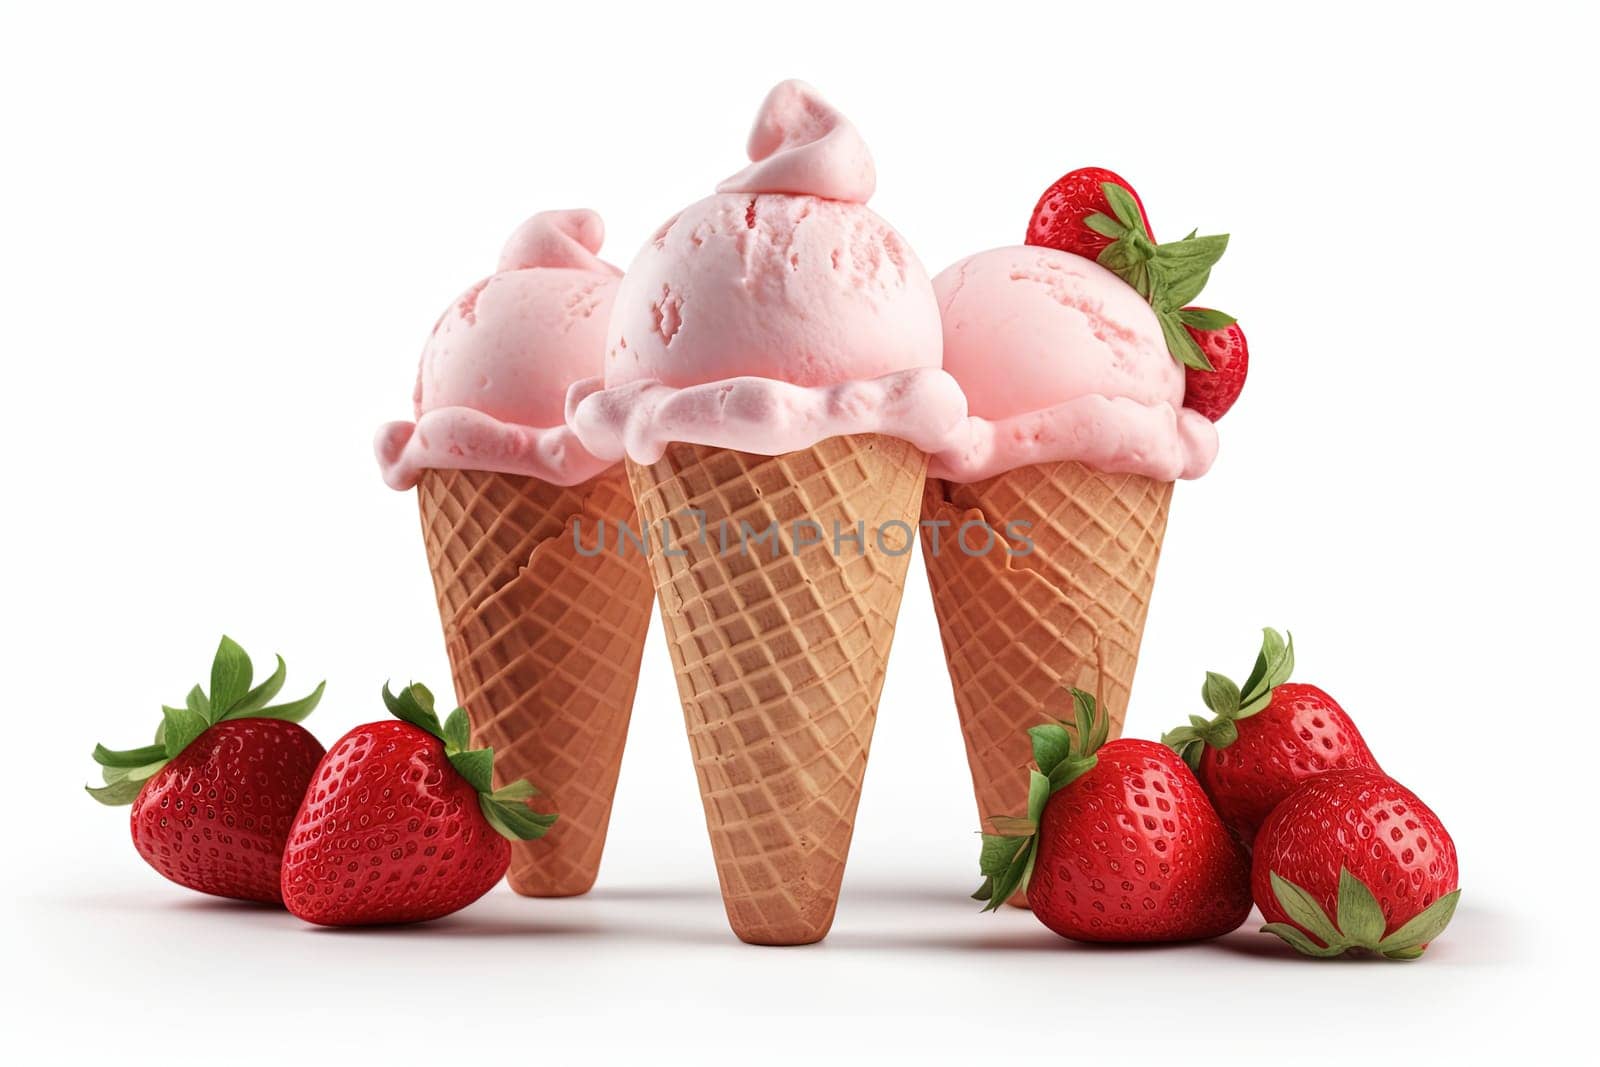 Ice cream with strawberrie by GekaSkr